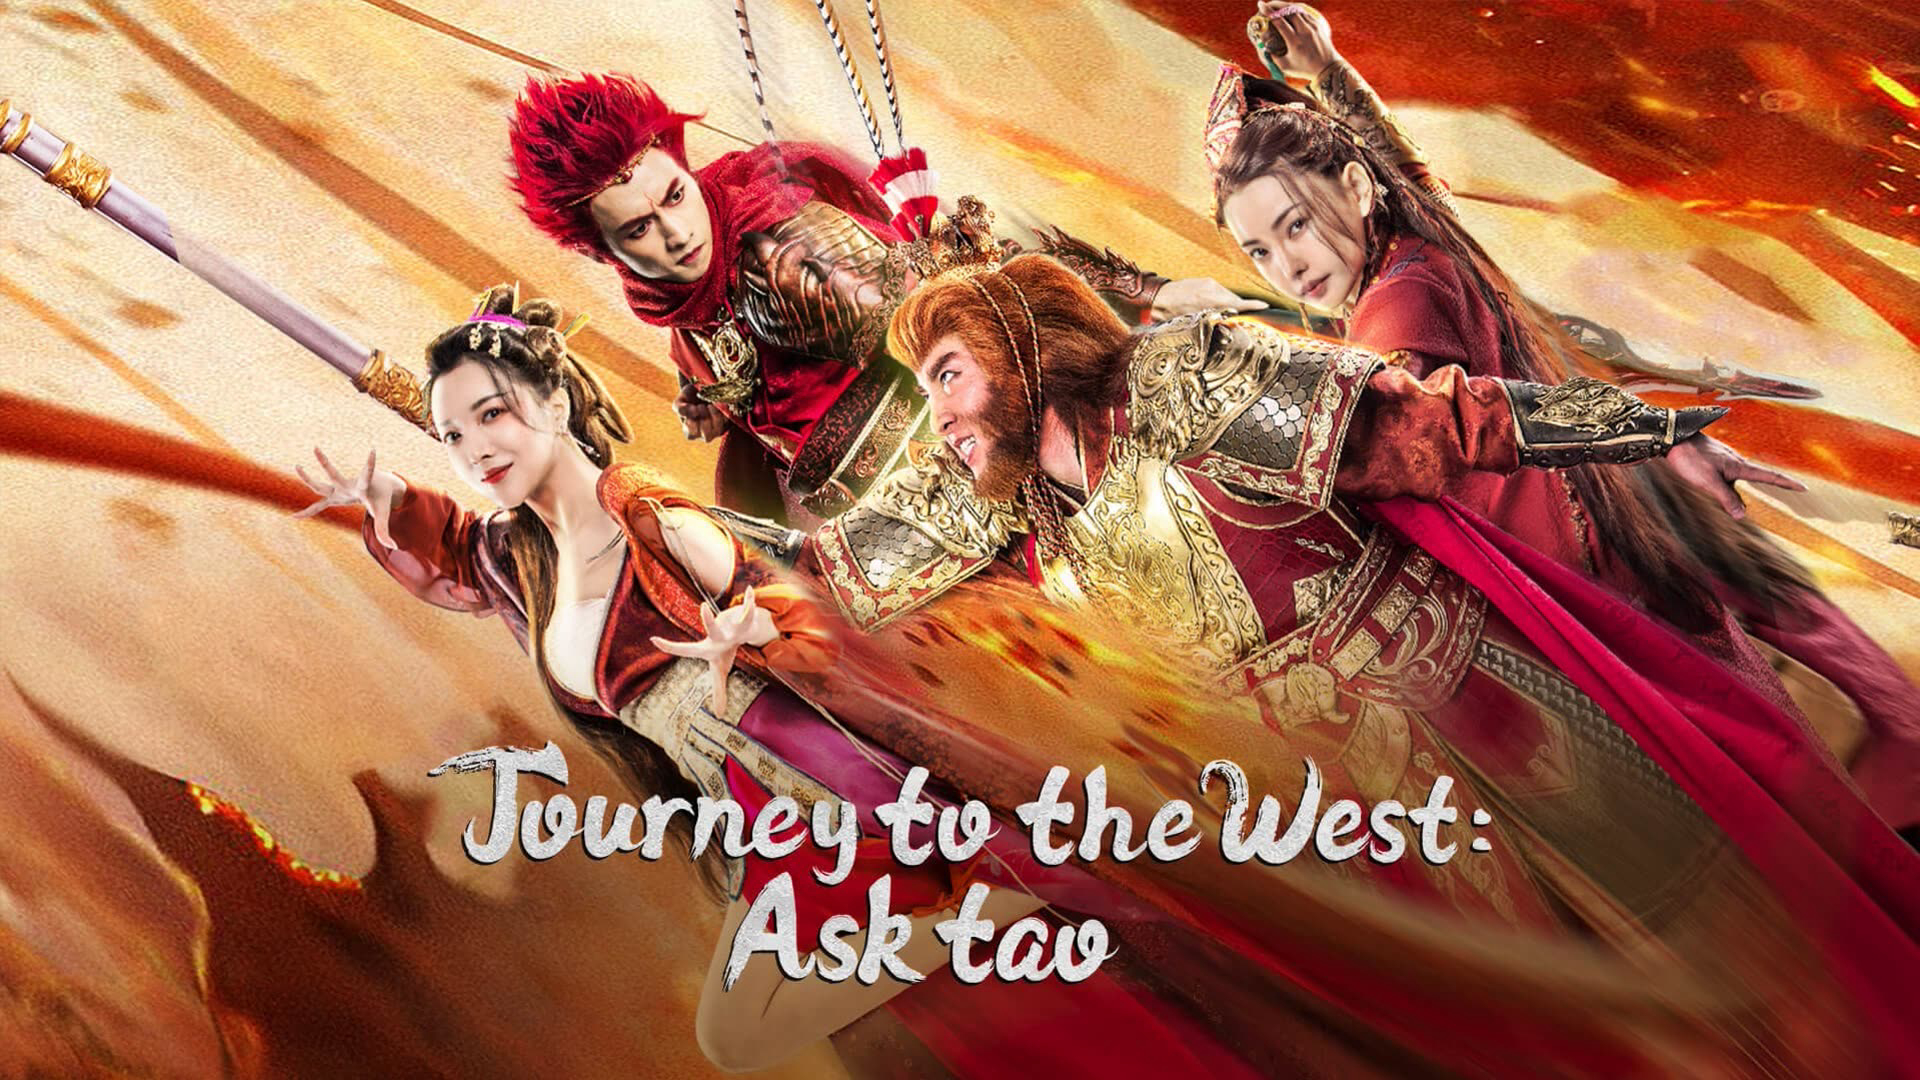 Xem Phim Tây Du Vấn Đạo, Journey to the West: Ask tao 2023